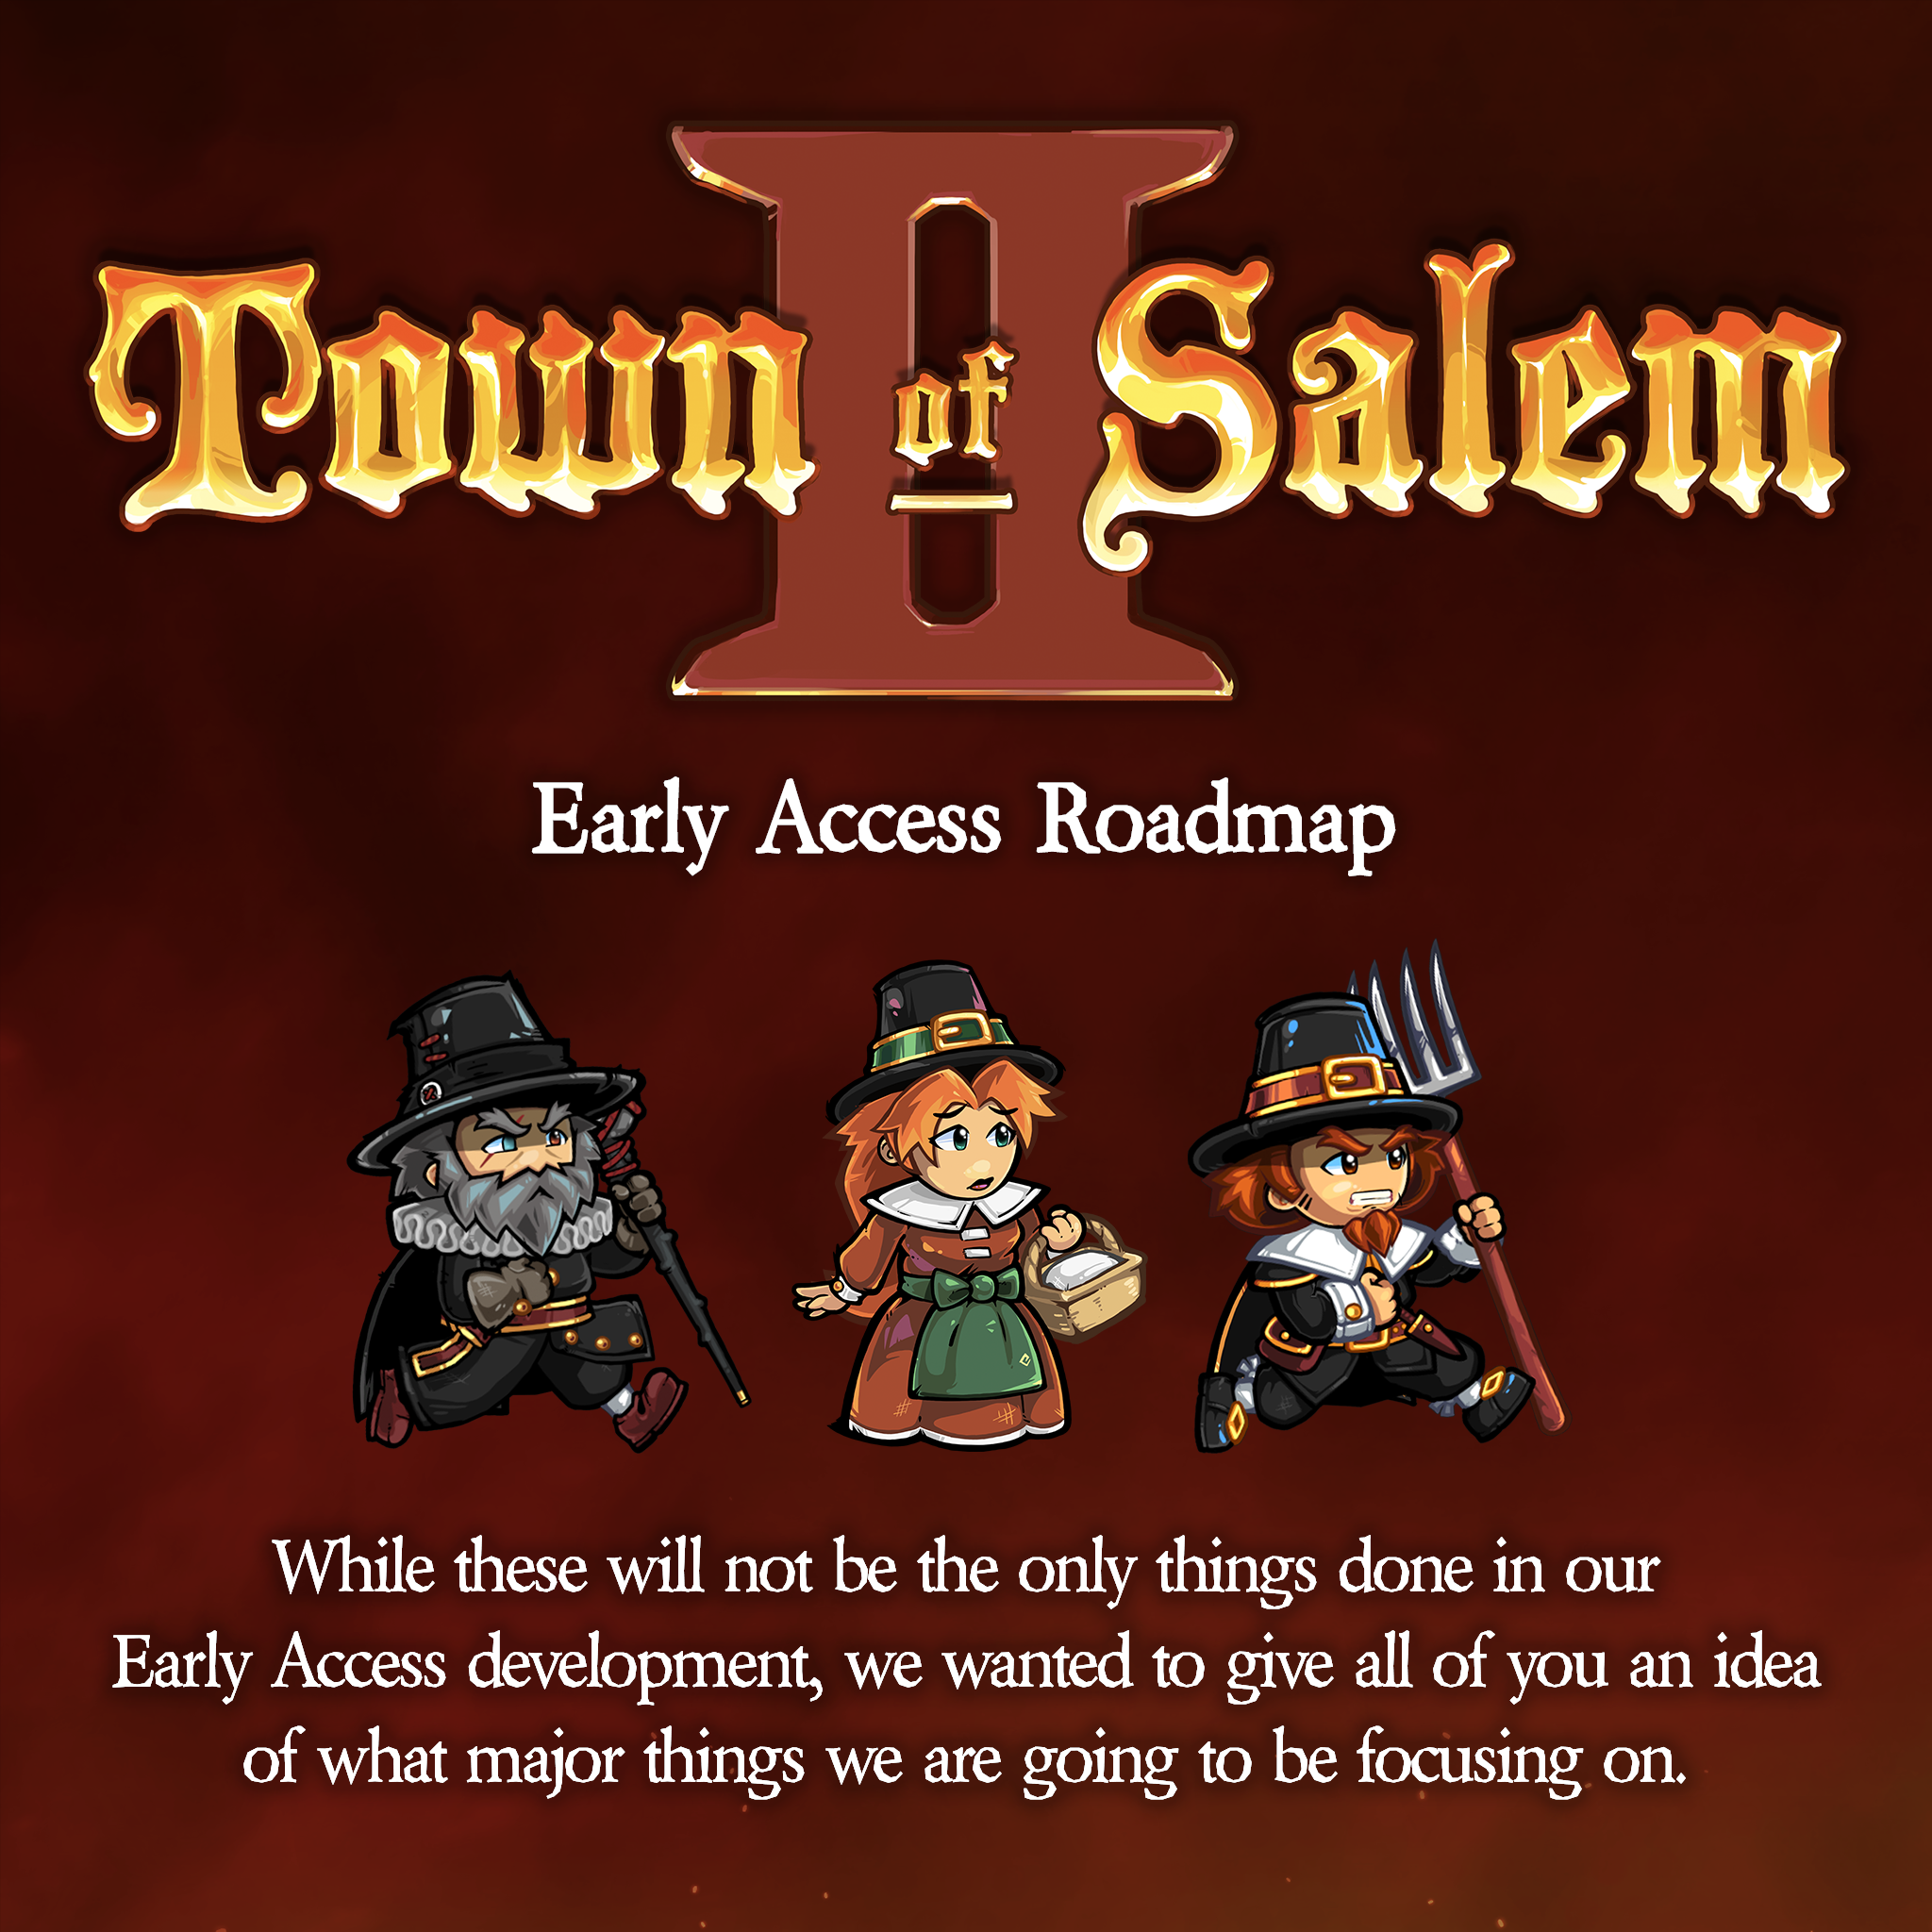 Early Access Roadmap — Town of Salem 2